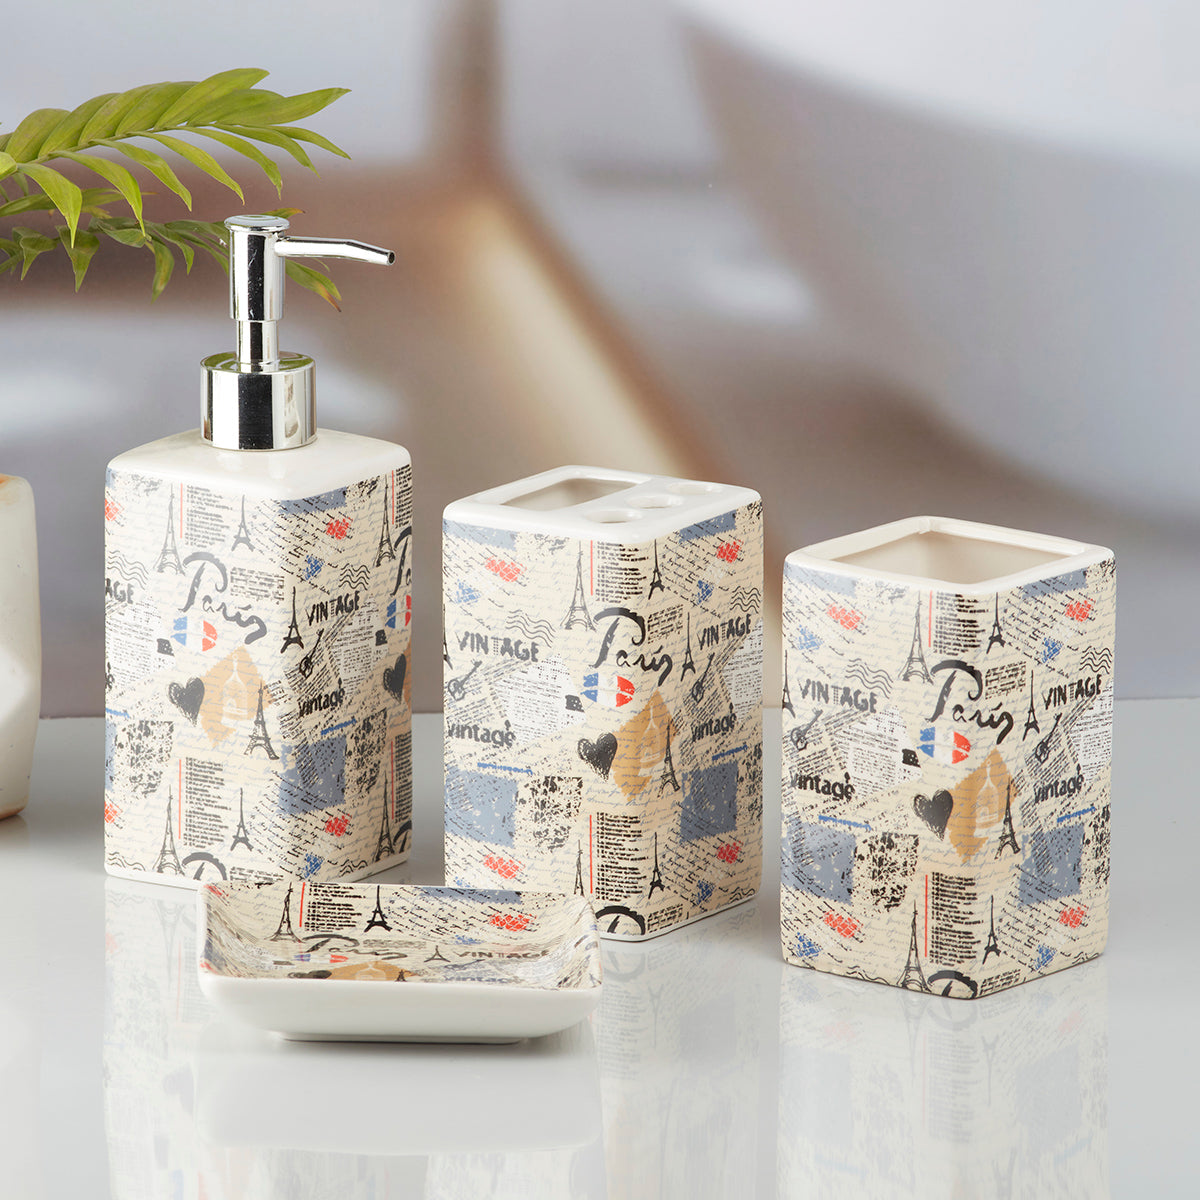 Ceramic Bathroom Accessories Set of 4 Bath Set with Soap Dispenser (9843)